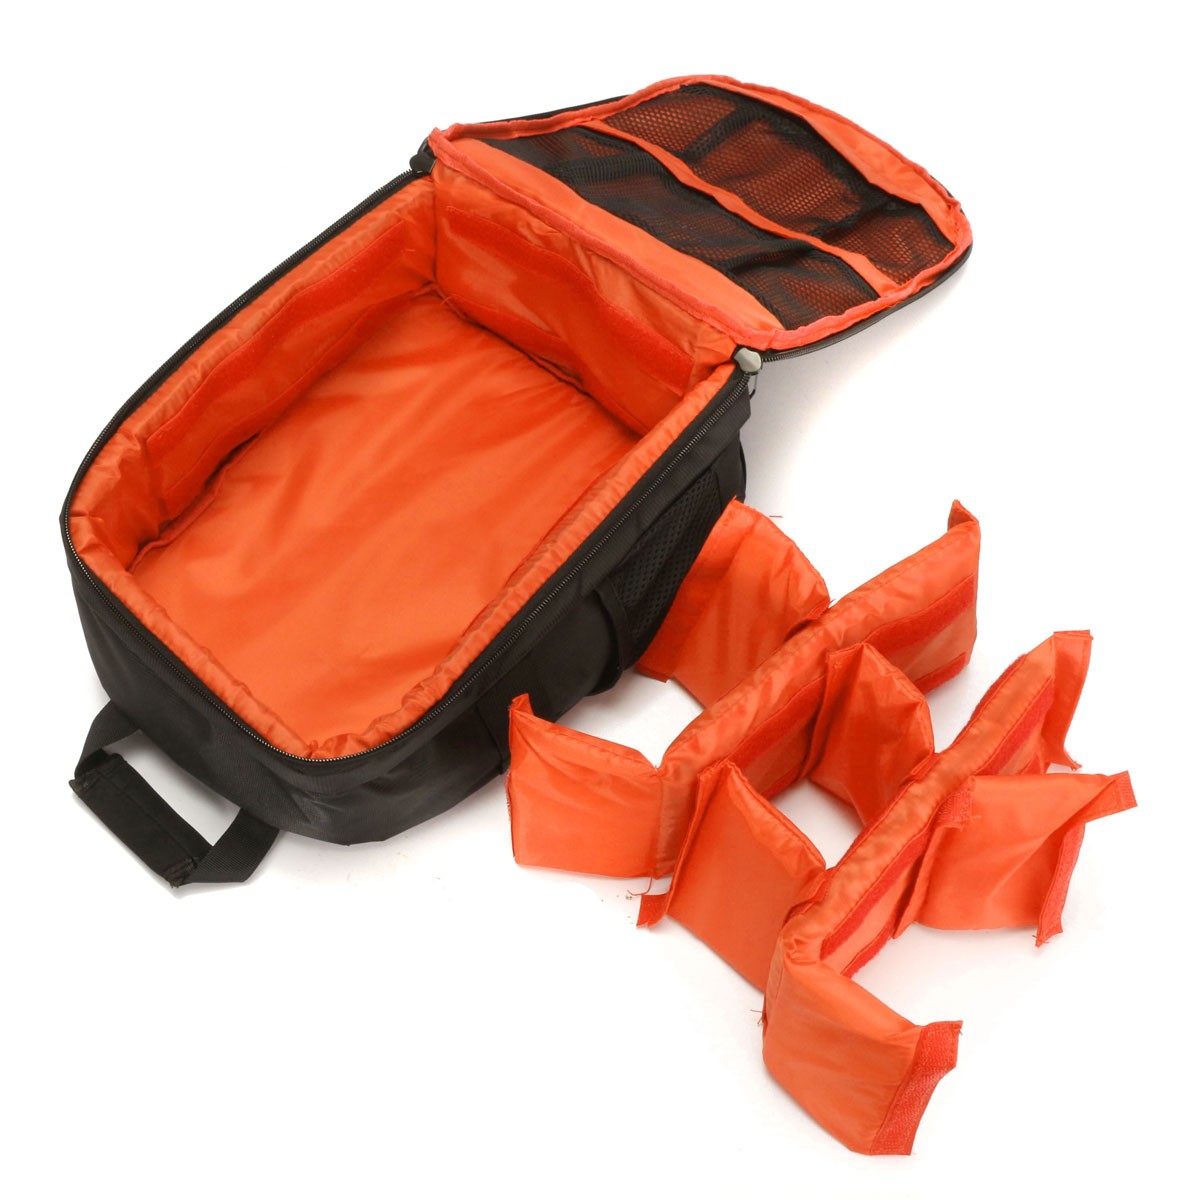 DL-B018 Waterproof Backpack Rucksack Case Bag for DSLR Caerma 17